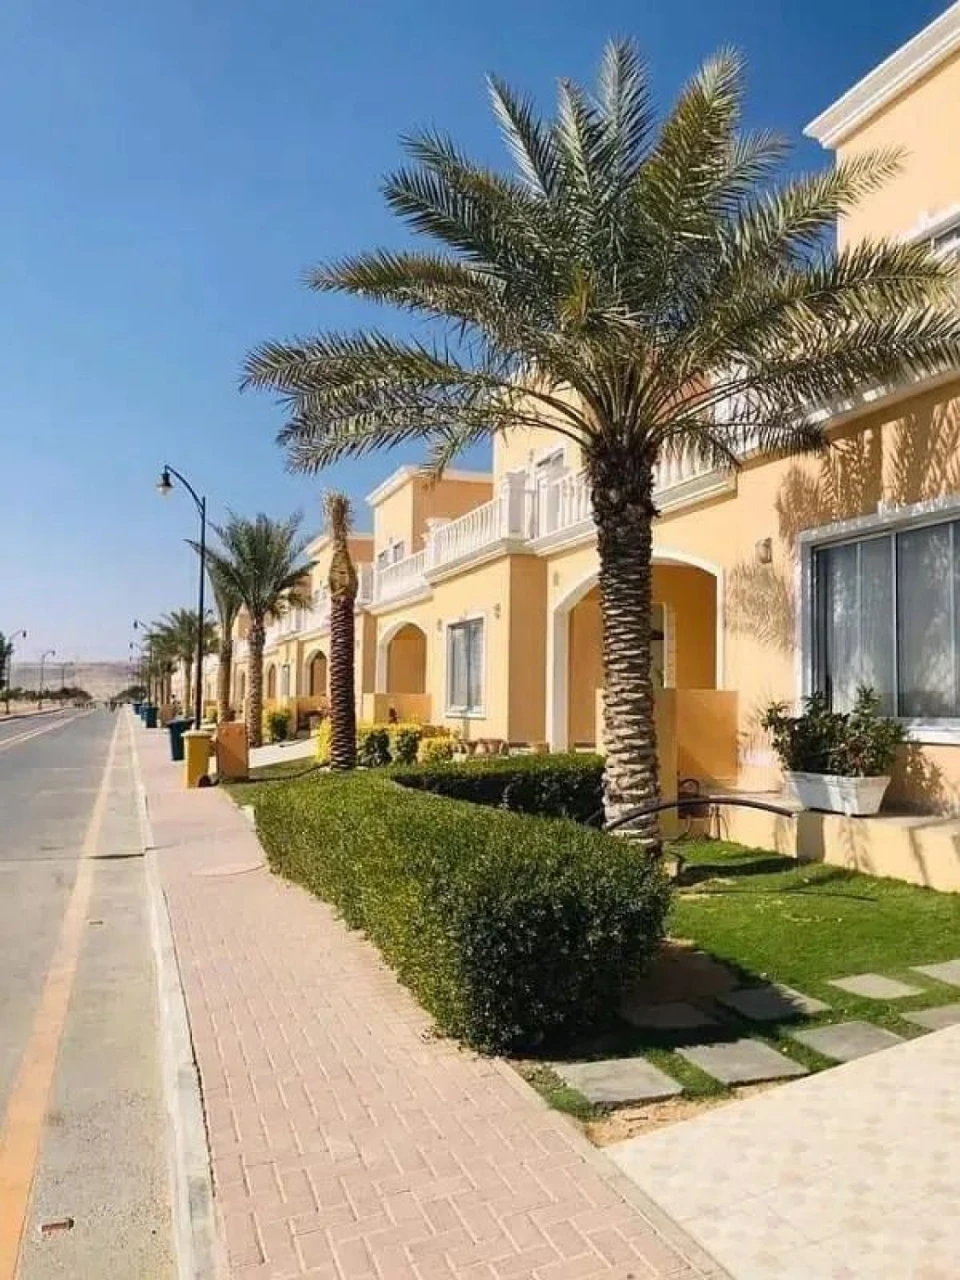 Precinct 35(350 sq yards) 4 bed room sport city villa for sale in bahria town karachi